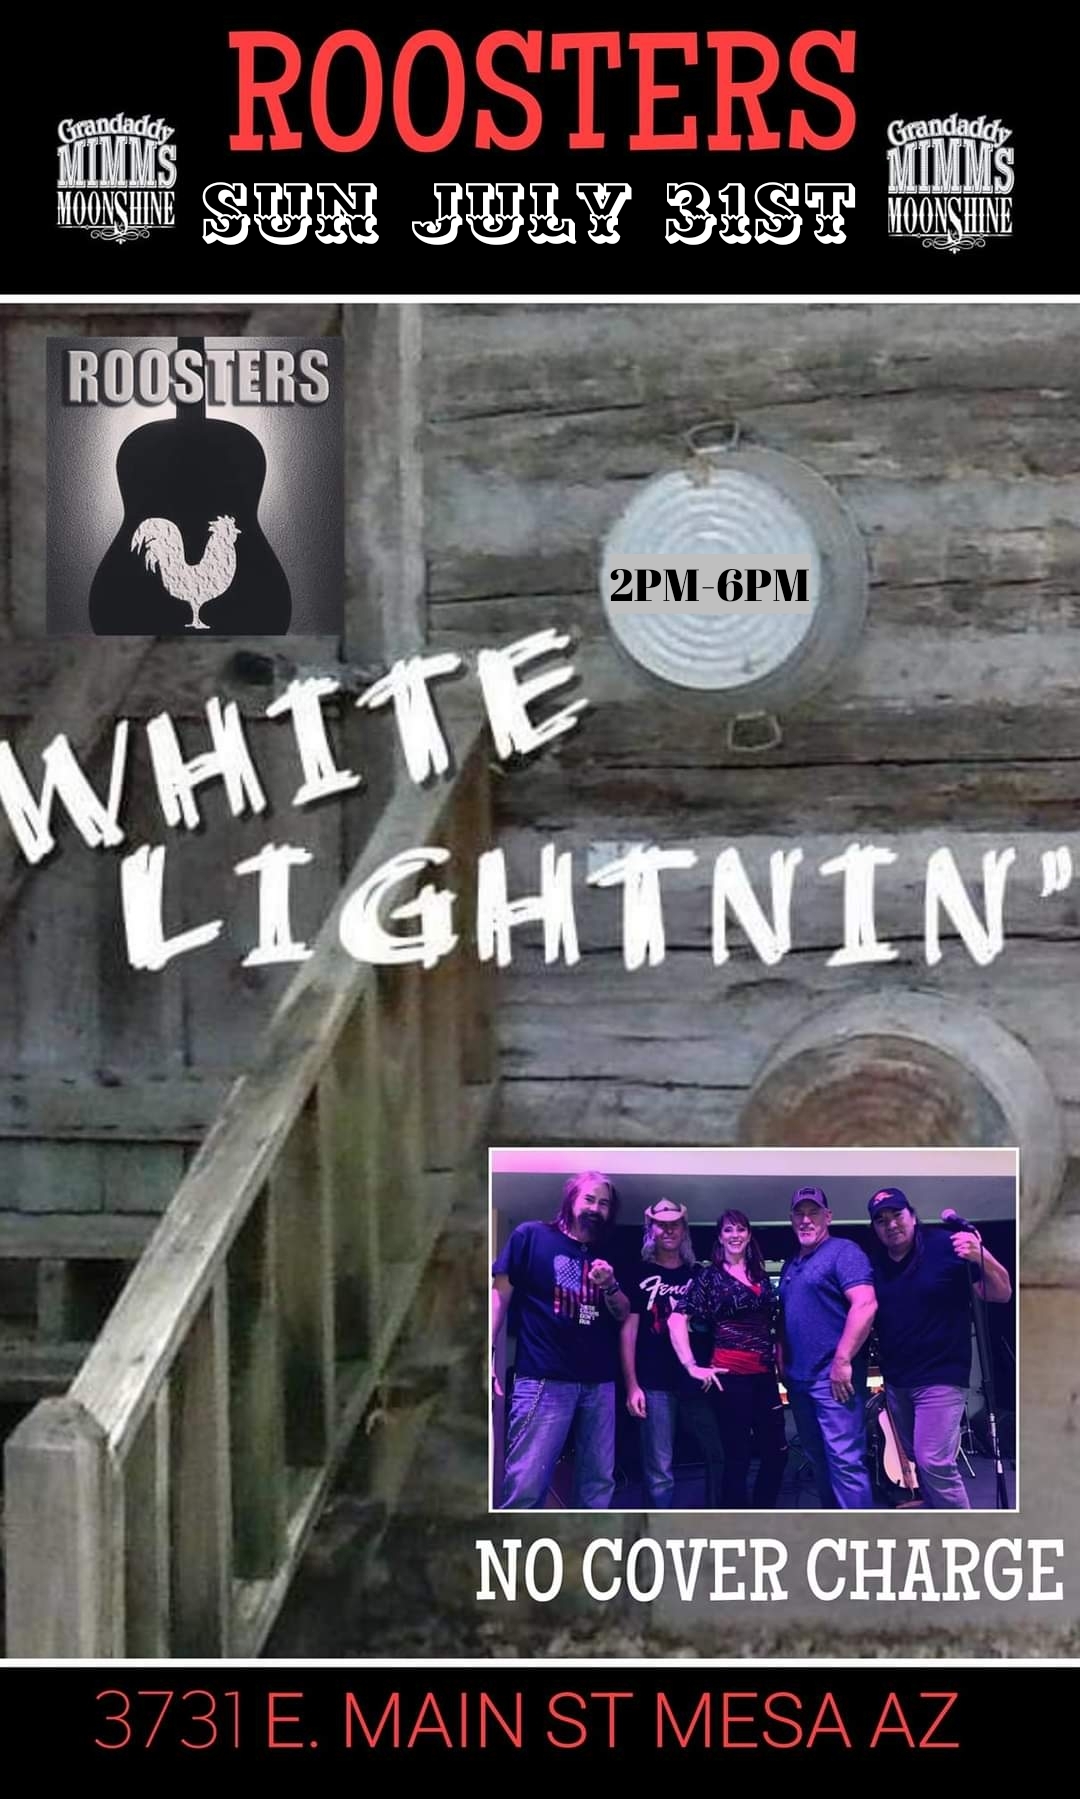 White Lightnin" Live - No Cover